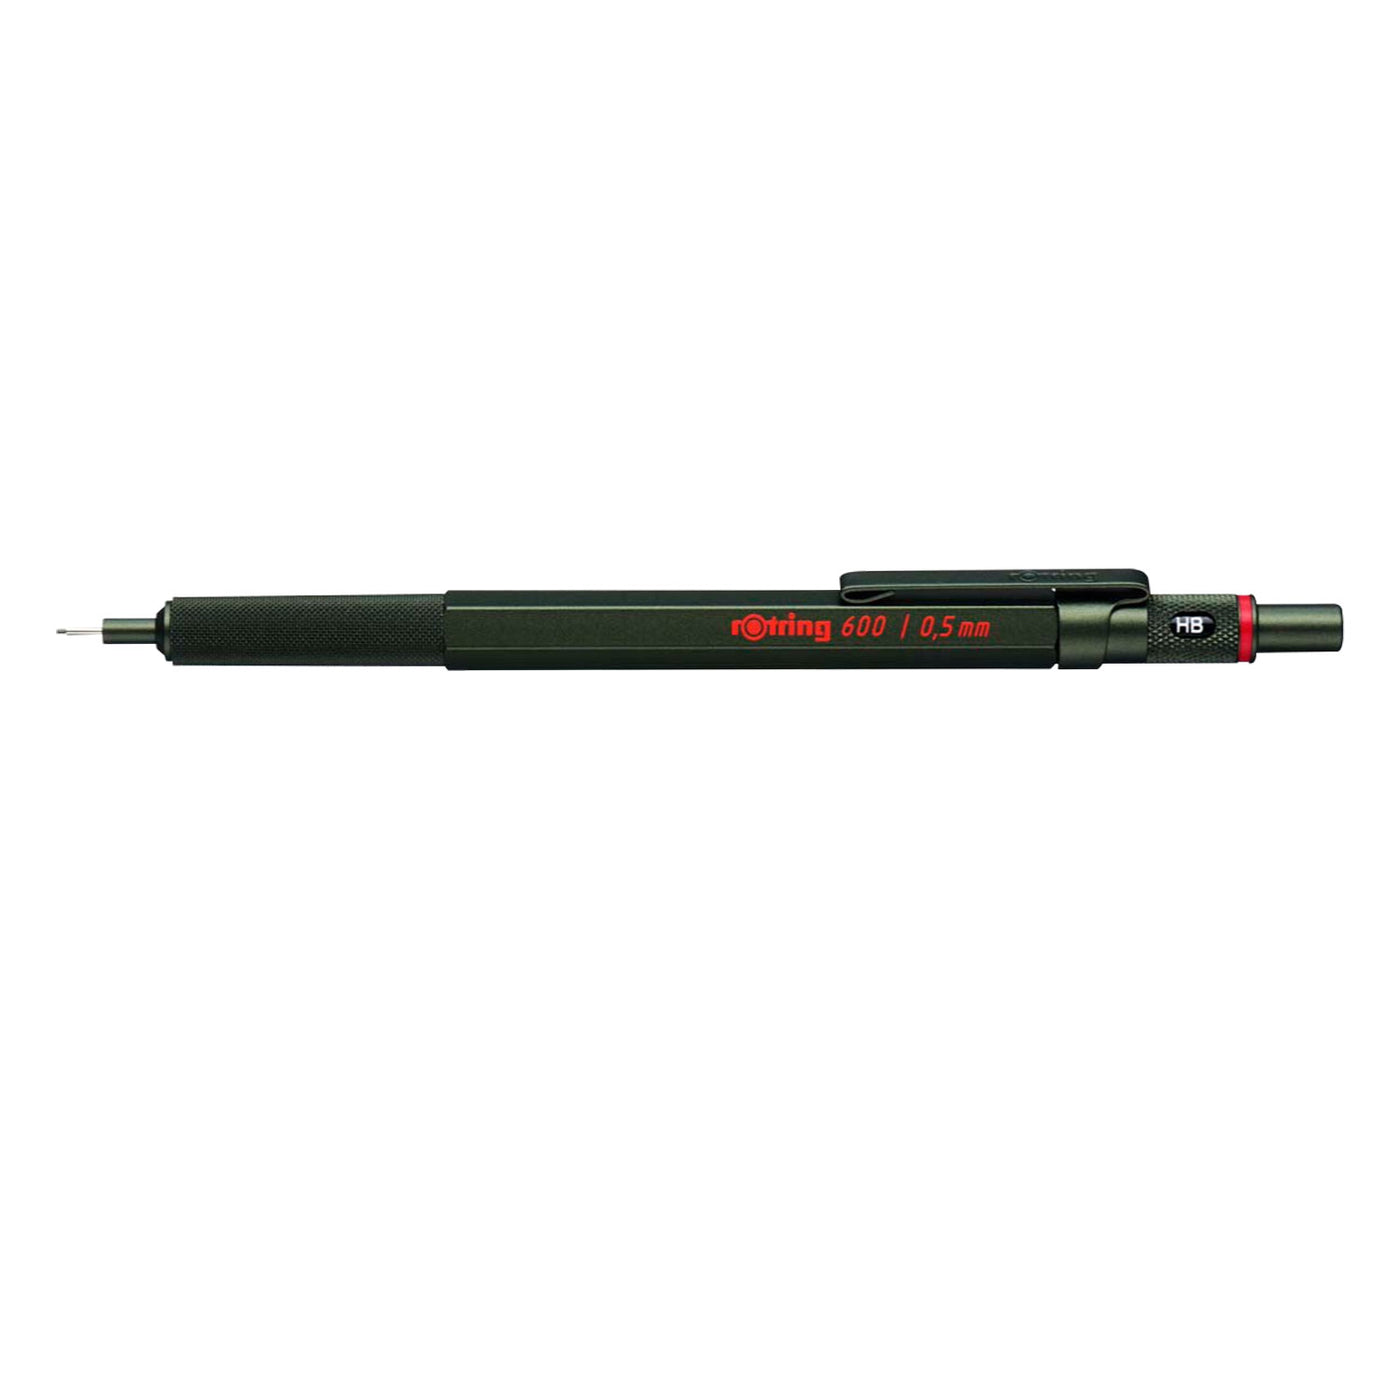 Rotring 600 0.5mm Mechanical Pencil - Green